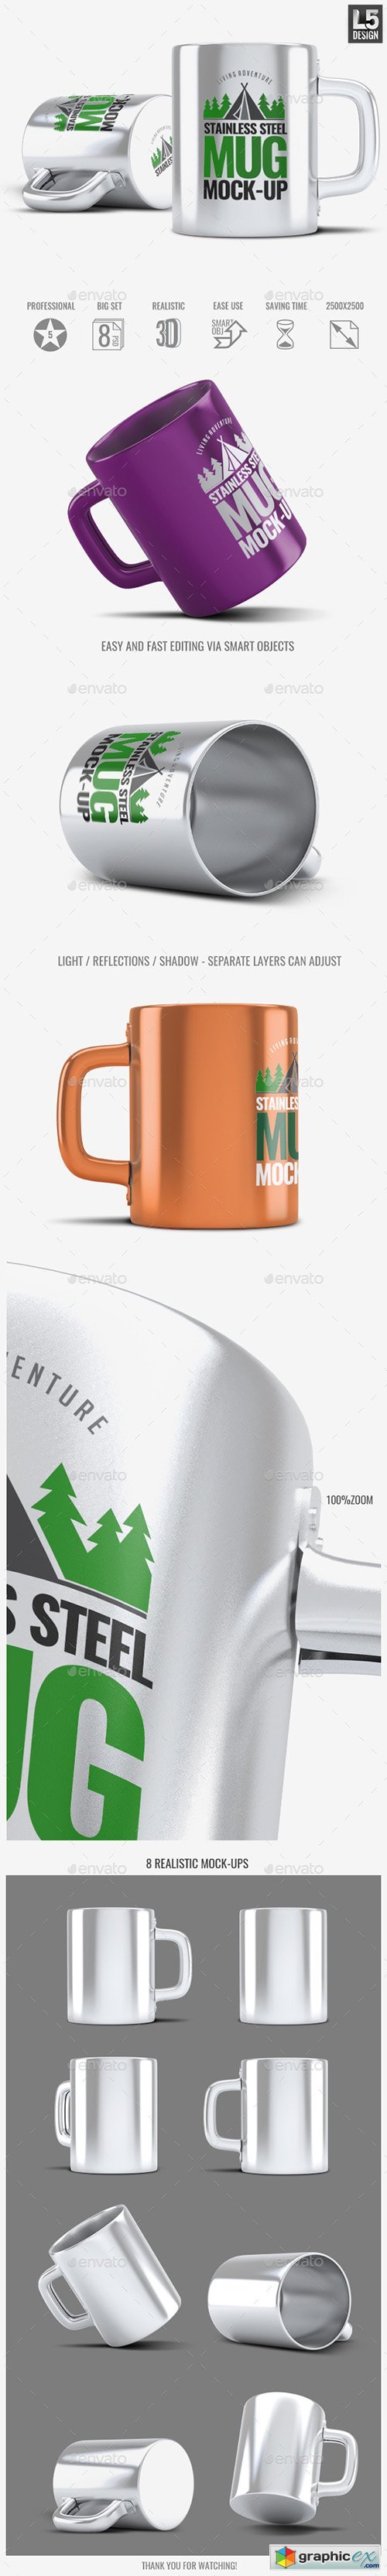 Stainless Steel Mug Mock-Up